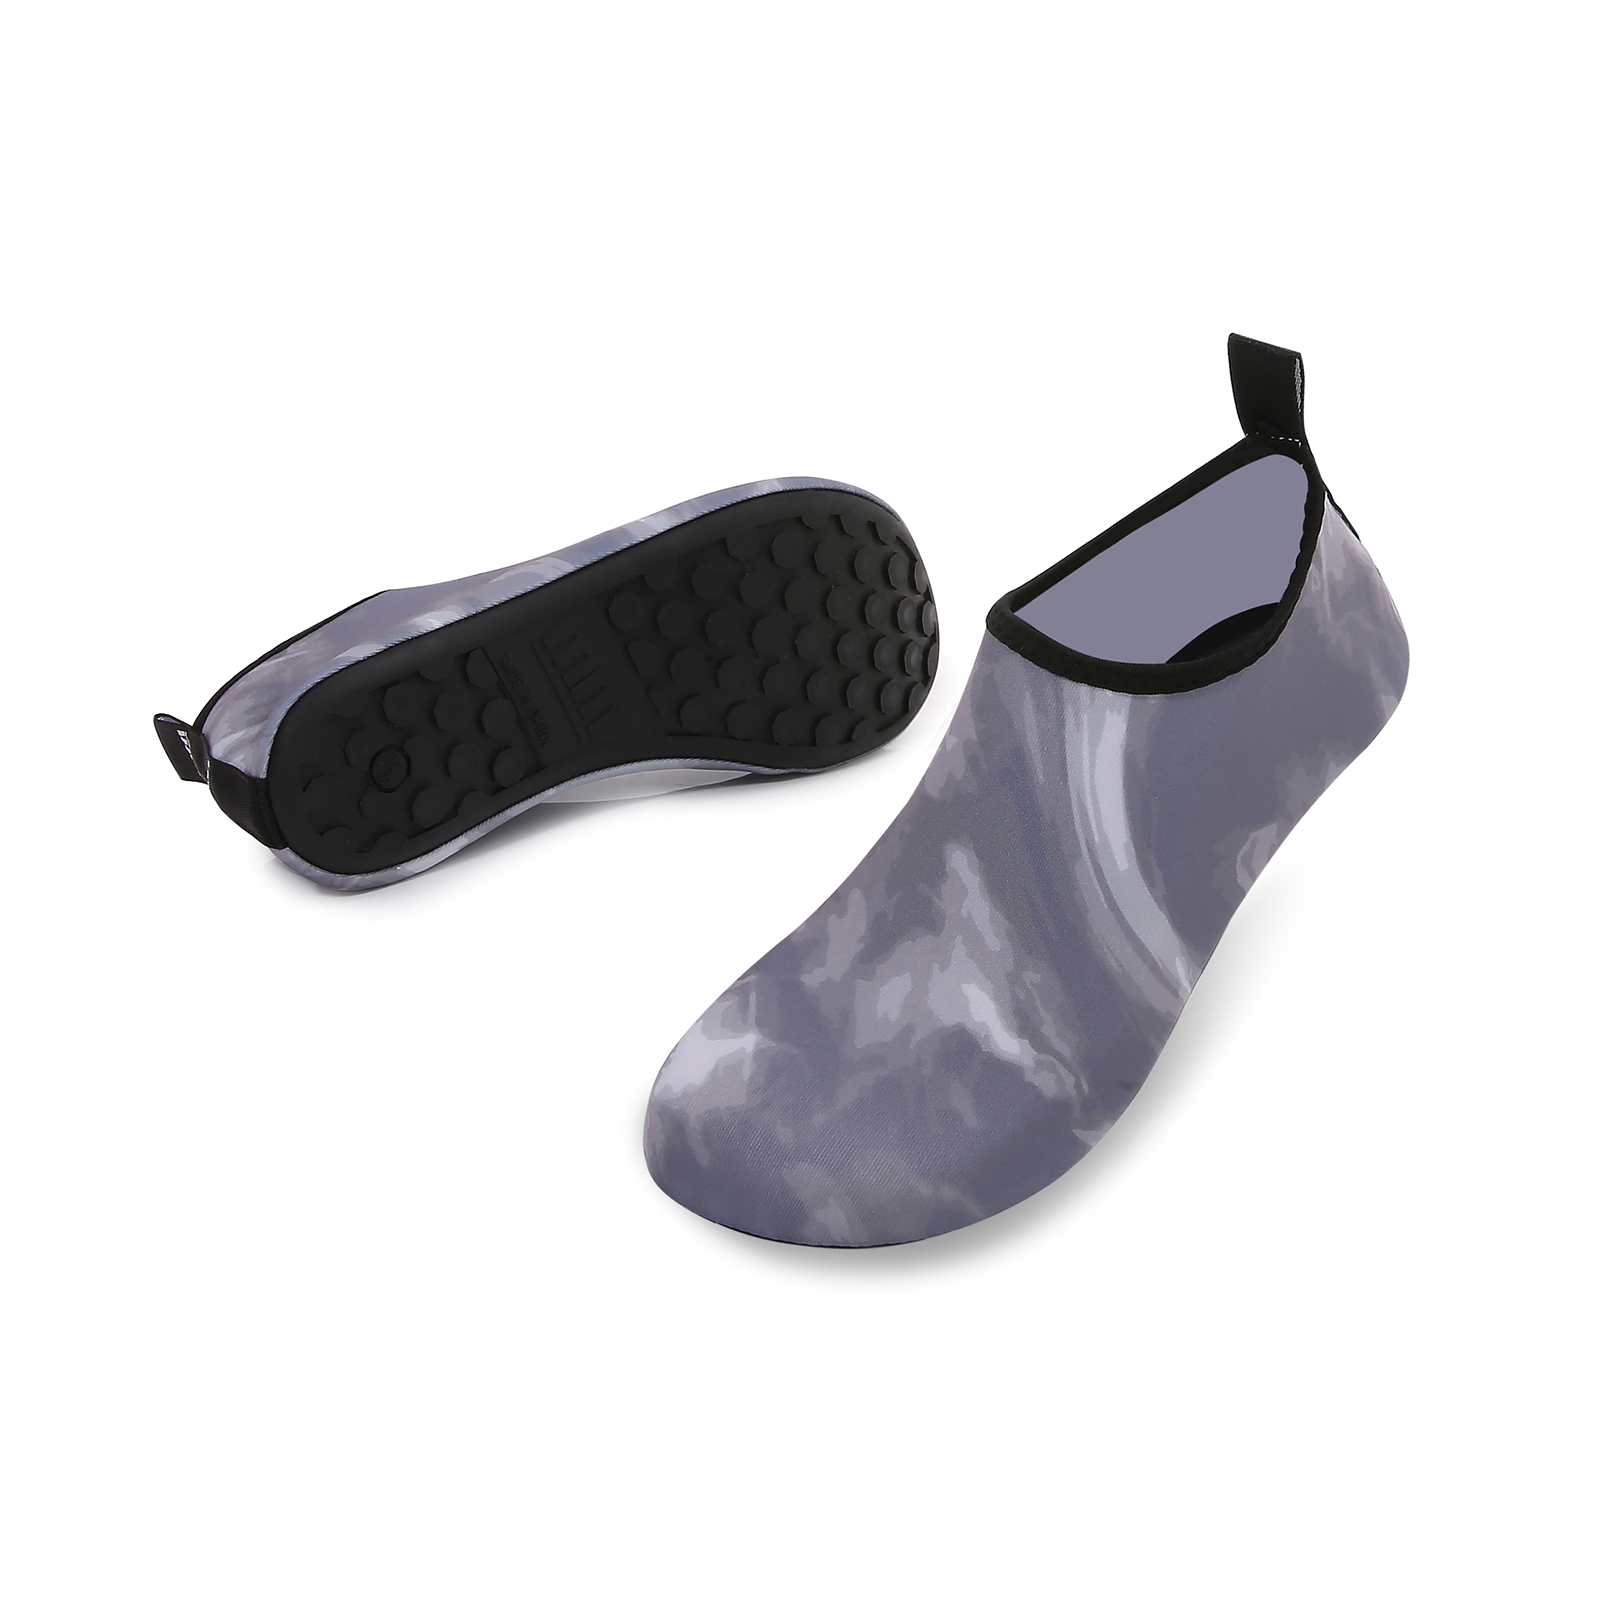 Men and Women a Slip On Barefoot Quick-Dry Beach Aqua Yoga Water Shoes (Fog/Grey, 13-14 Women/10.5-11 Men) - image 4 of 8